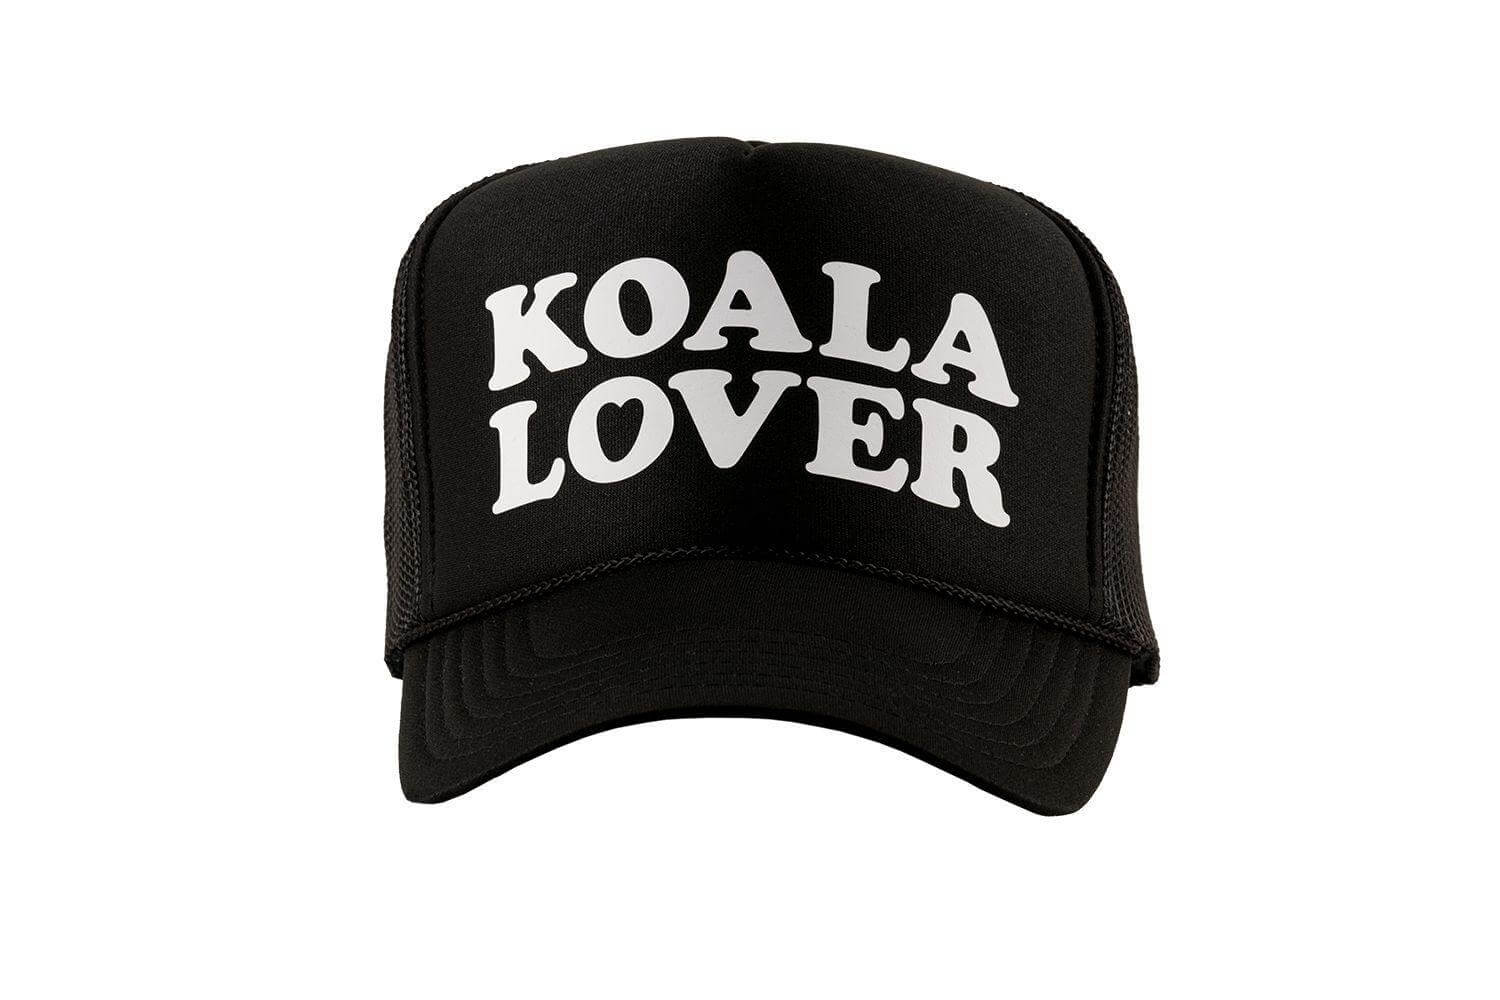 Koala Lover (black) high crown trucker cap with mesh back and snapback - Tropic Trucker Australia®